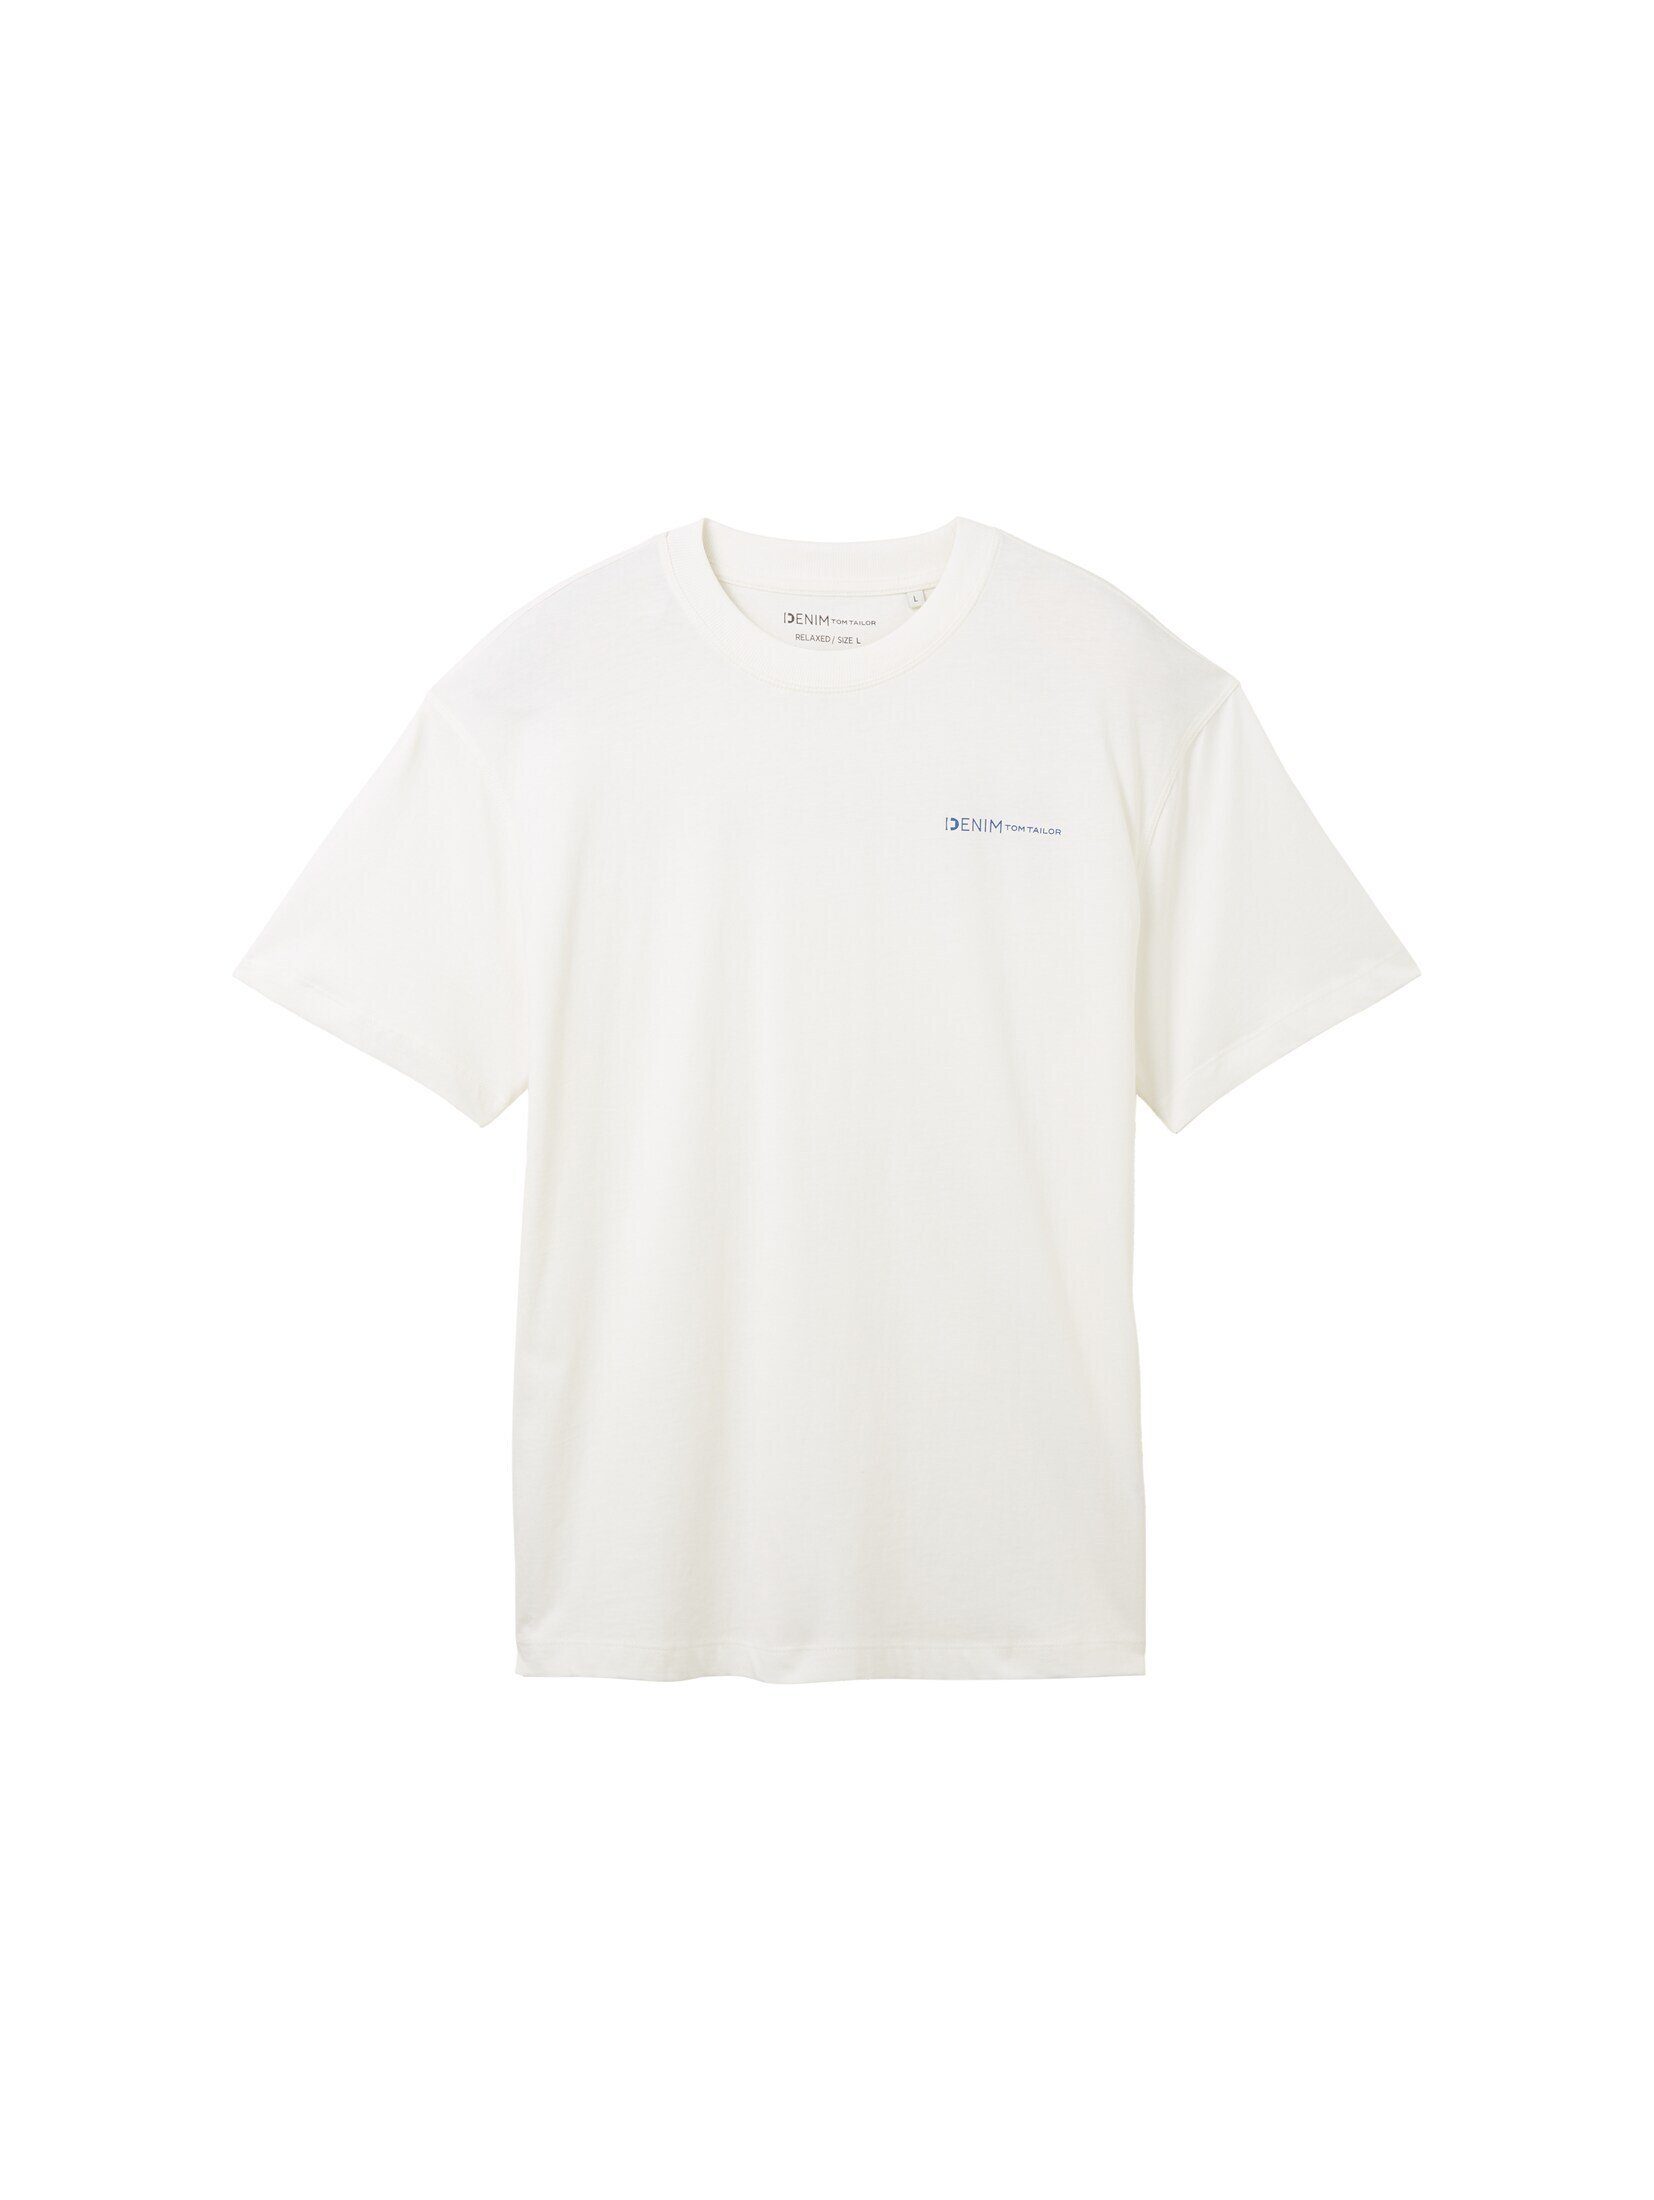 Wool Denim White mit TOM Bio-Baumwolle T-Shirt T-Shirt TAILOR